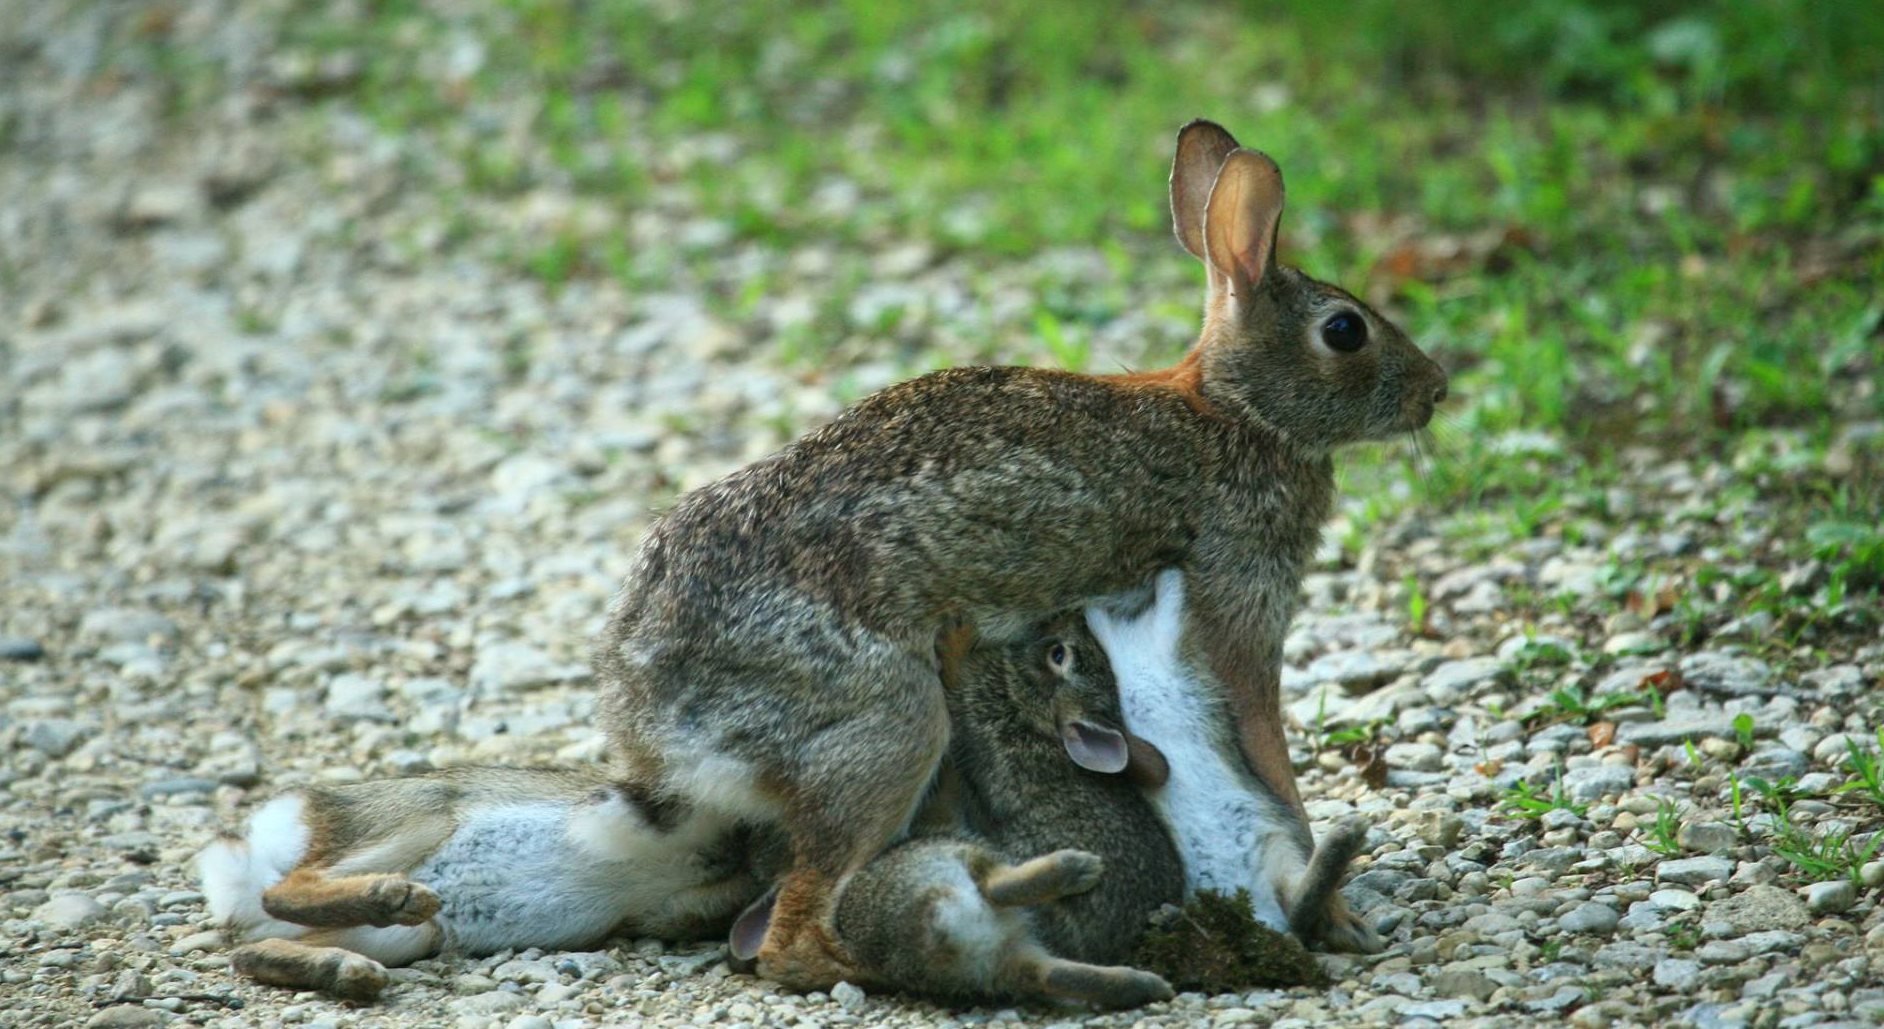 When Do Rabbits Give Birth?